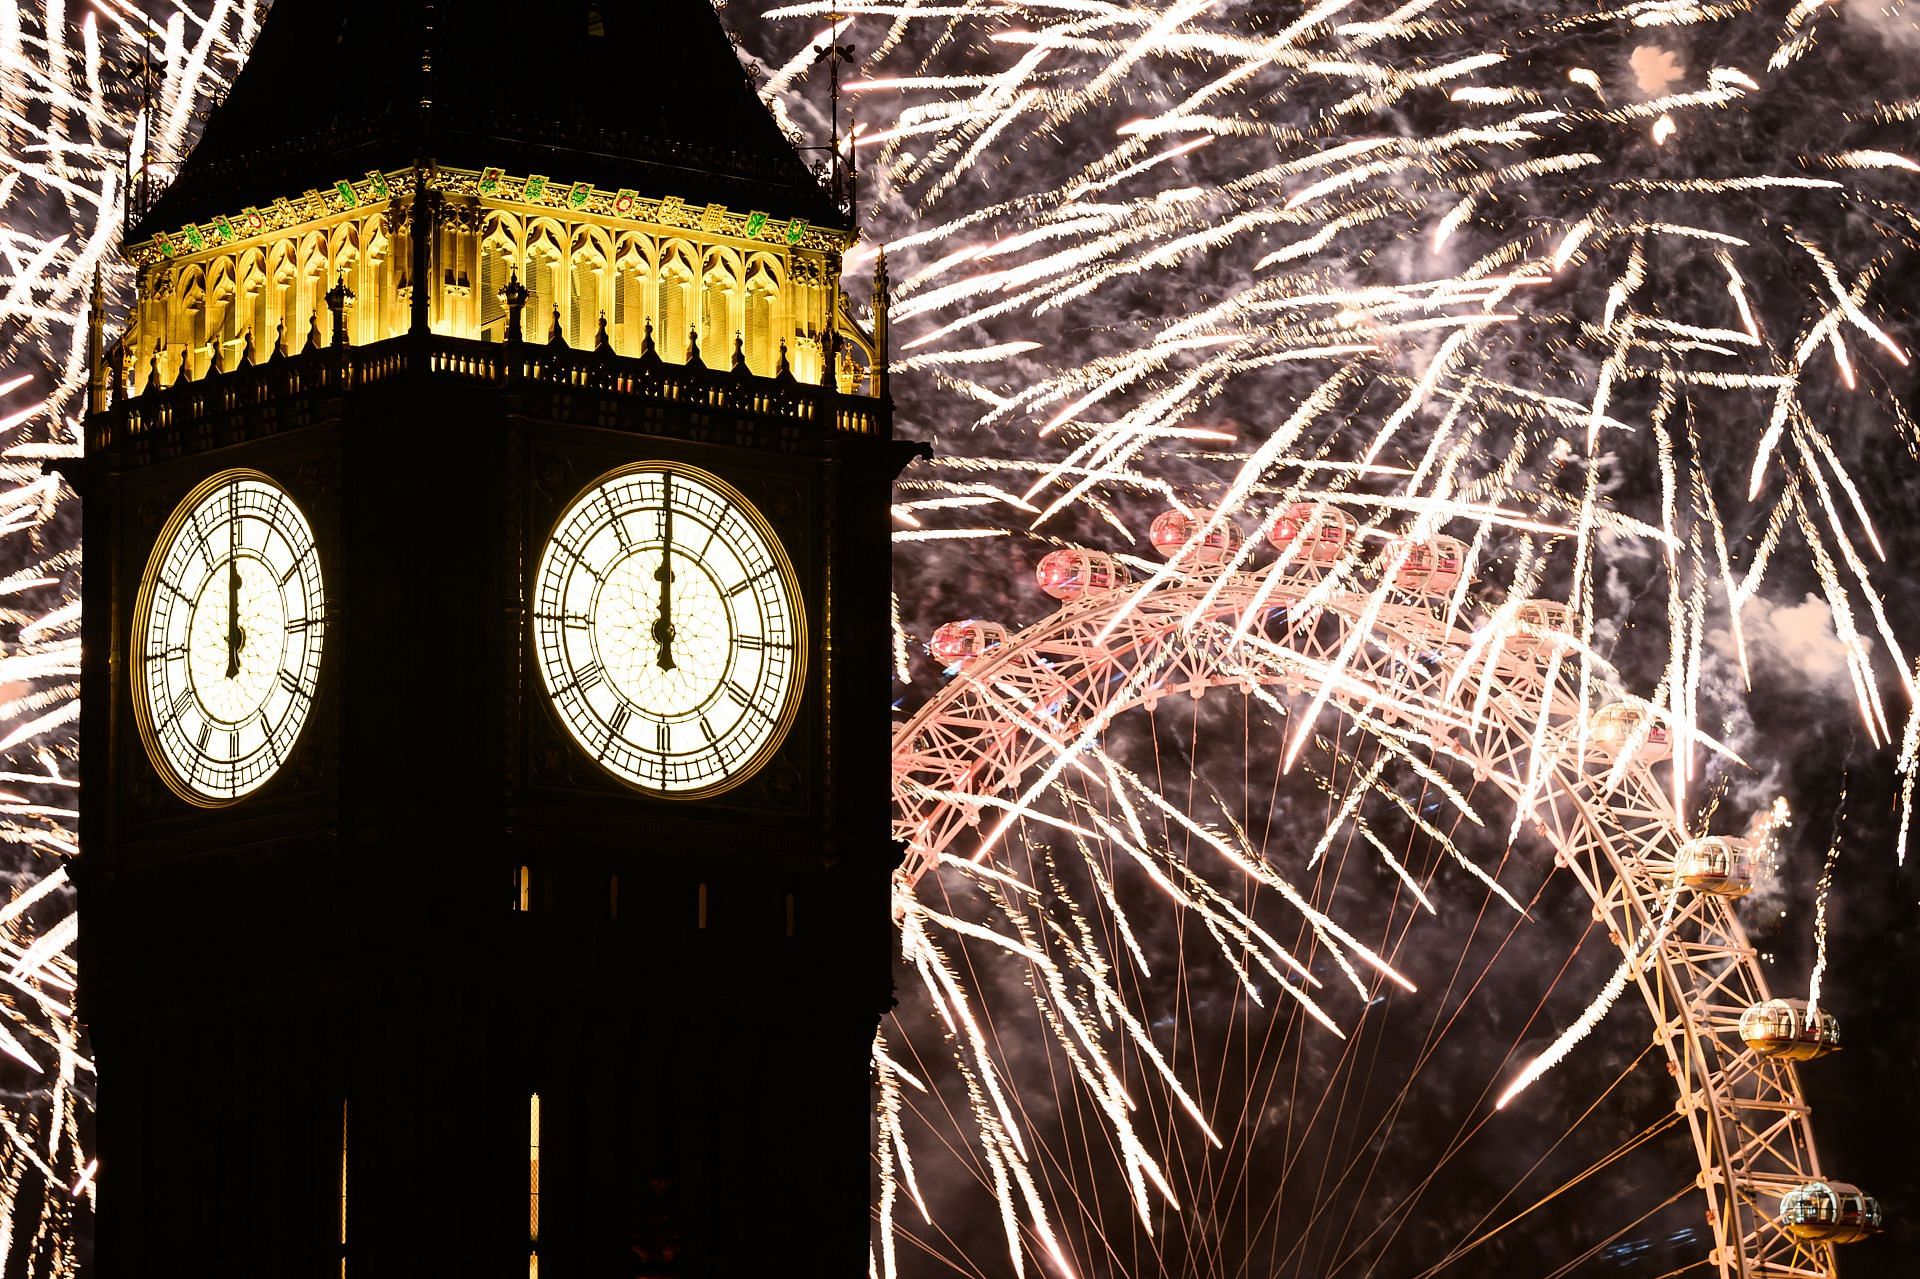 UK Celebrates The New Year With London Fireworks